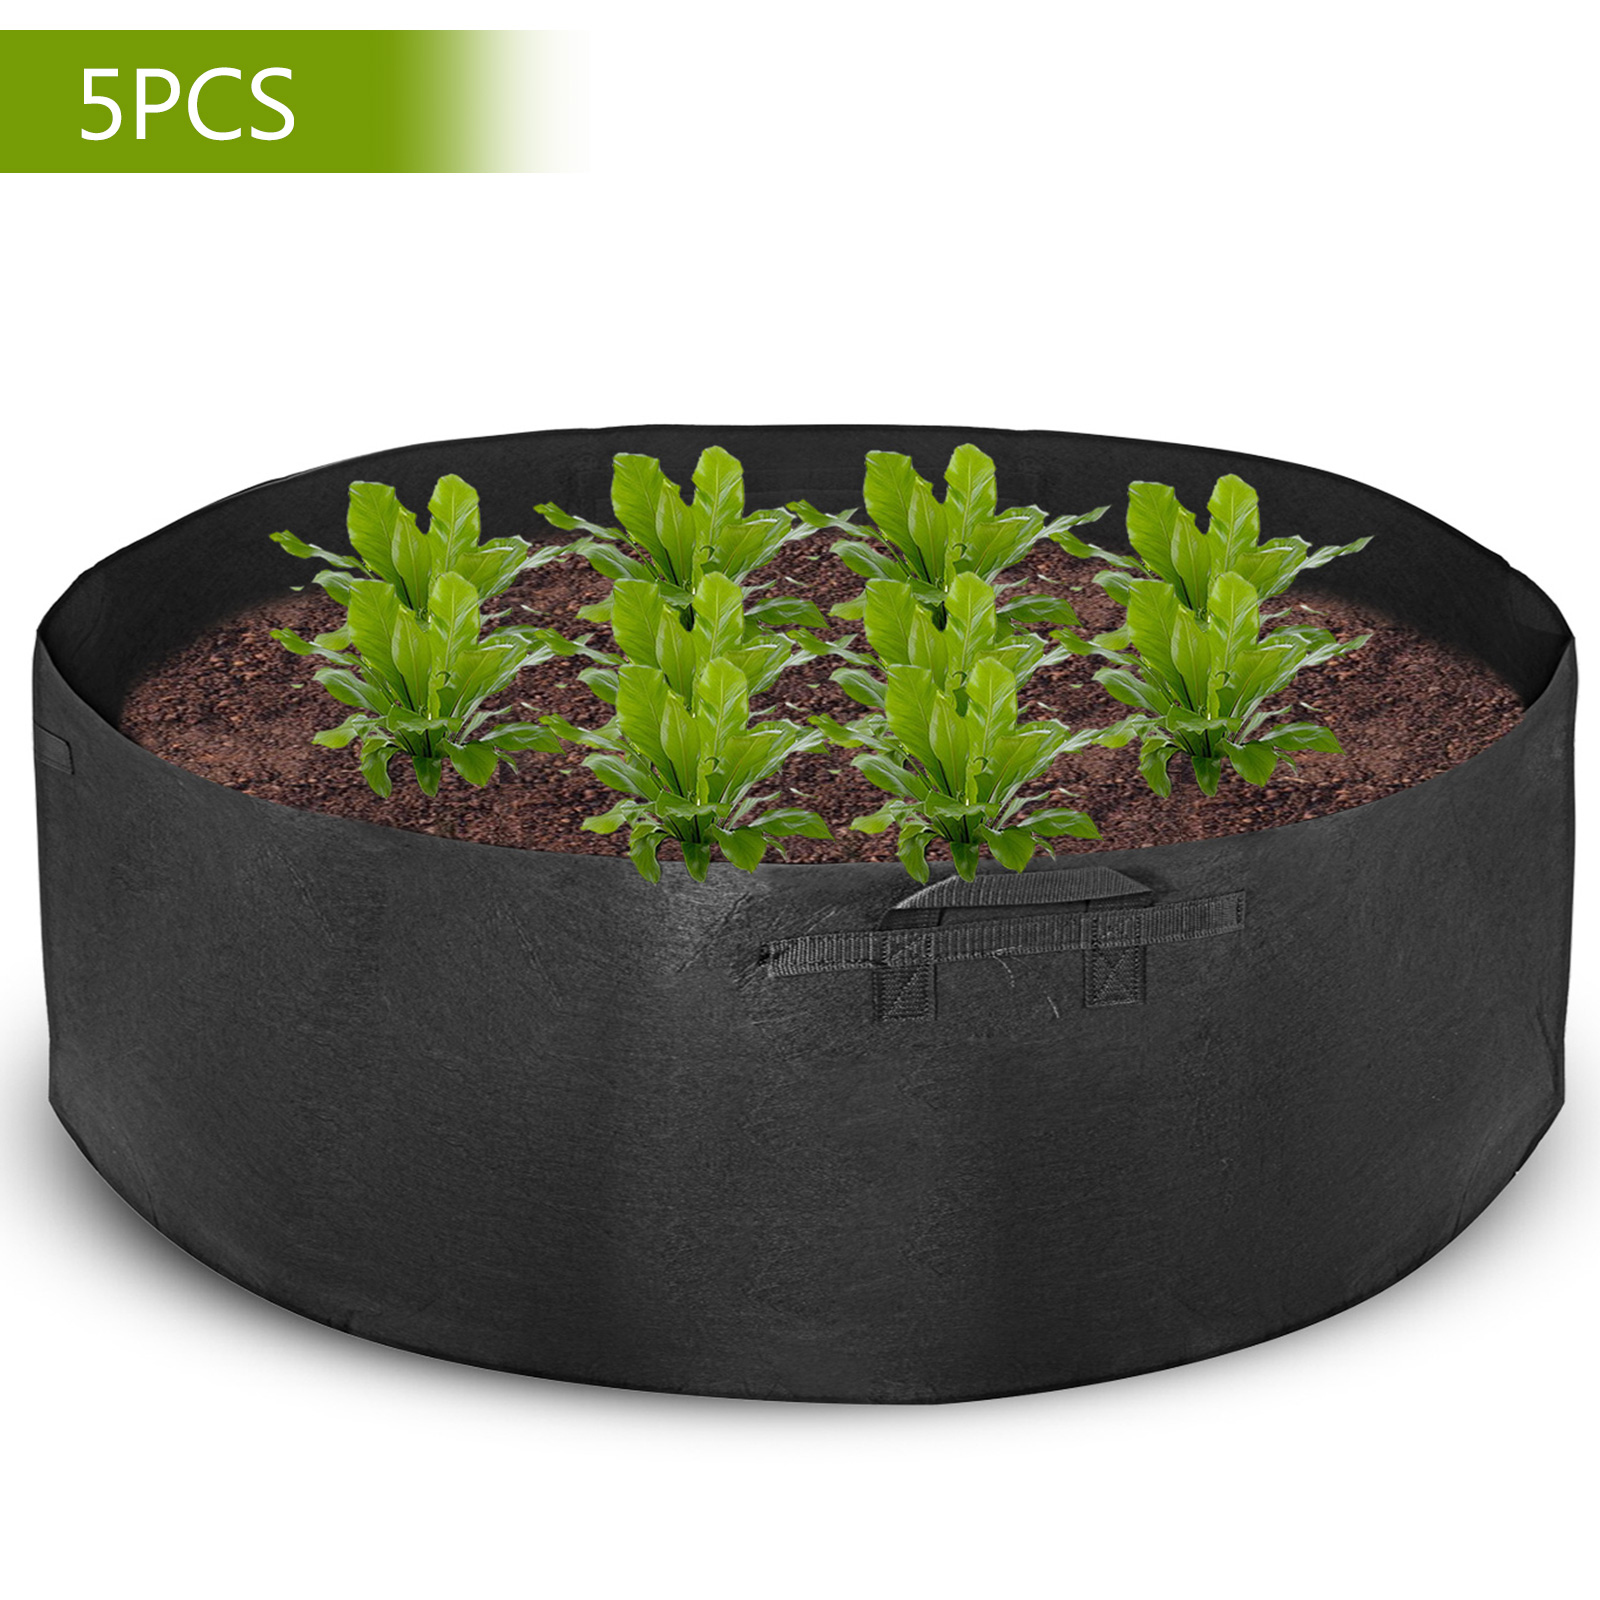 5PCS Grow Bags Fabric Planters Plant Pot Marijuana Balcony Garden 3/5/10Gallon